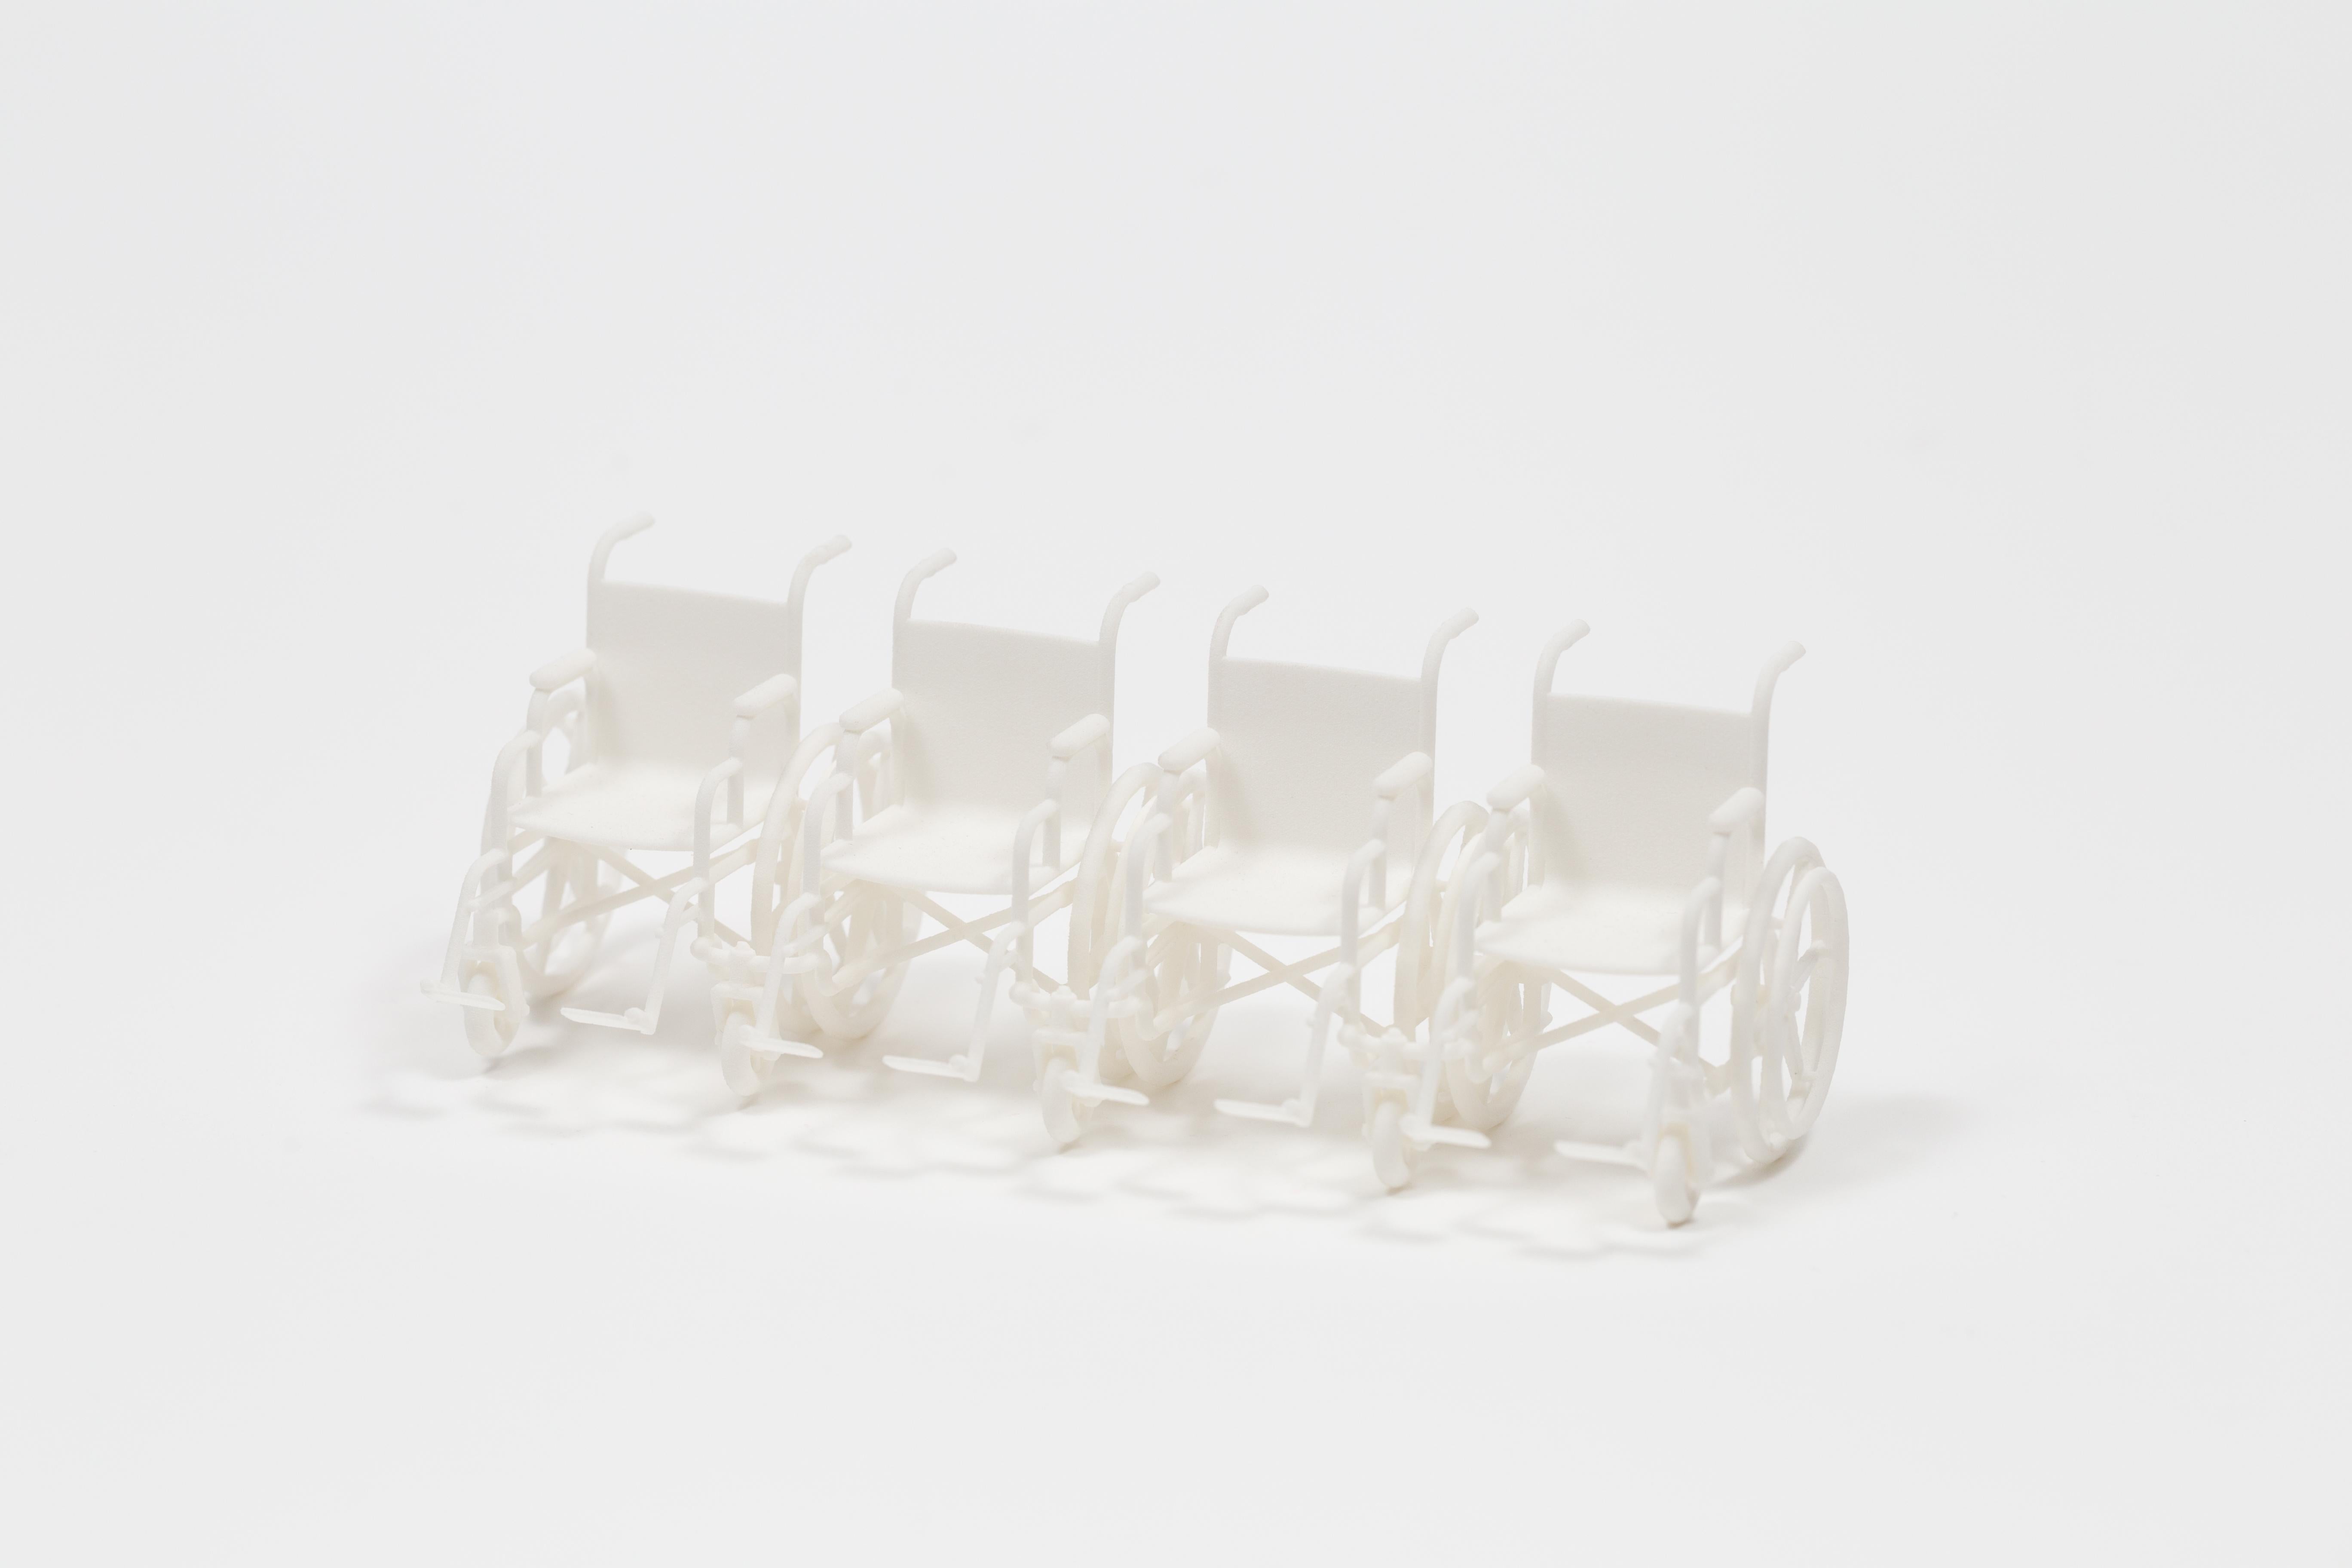 Prototype pour un effort collectif - Gray Abstract Sculpture by Guillaume Lachapelle